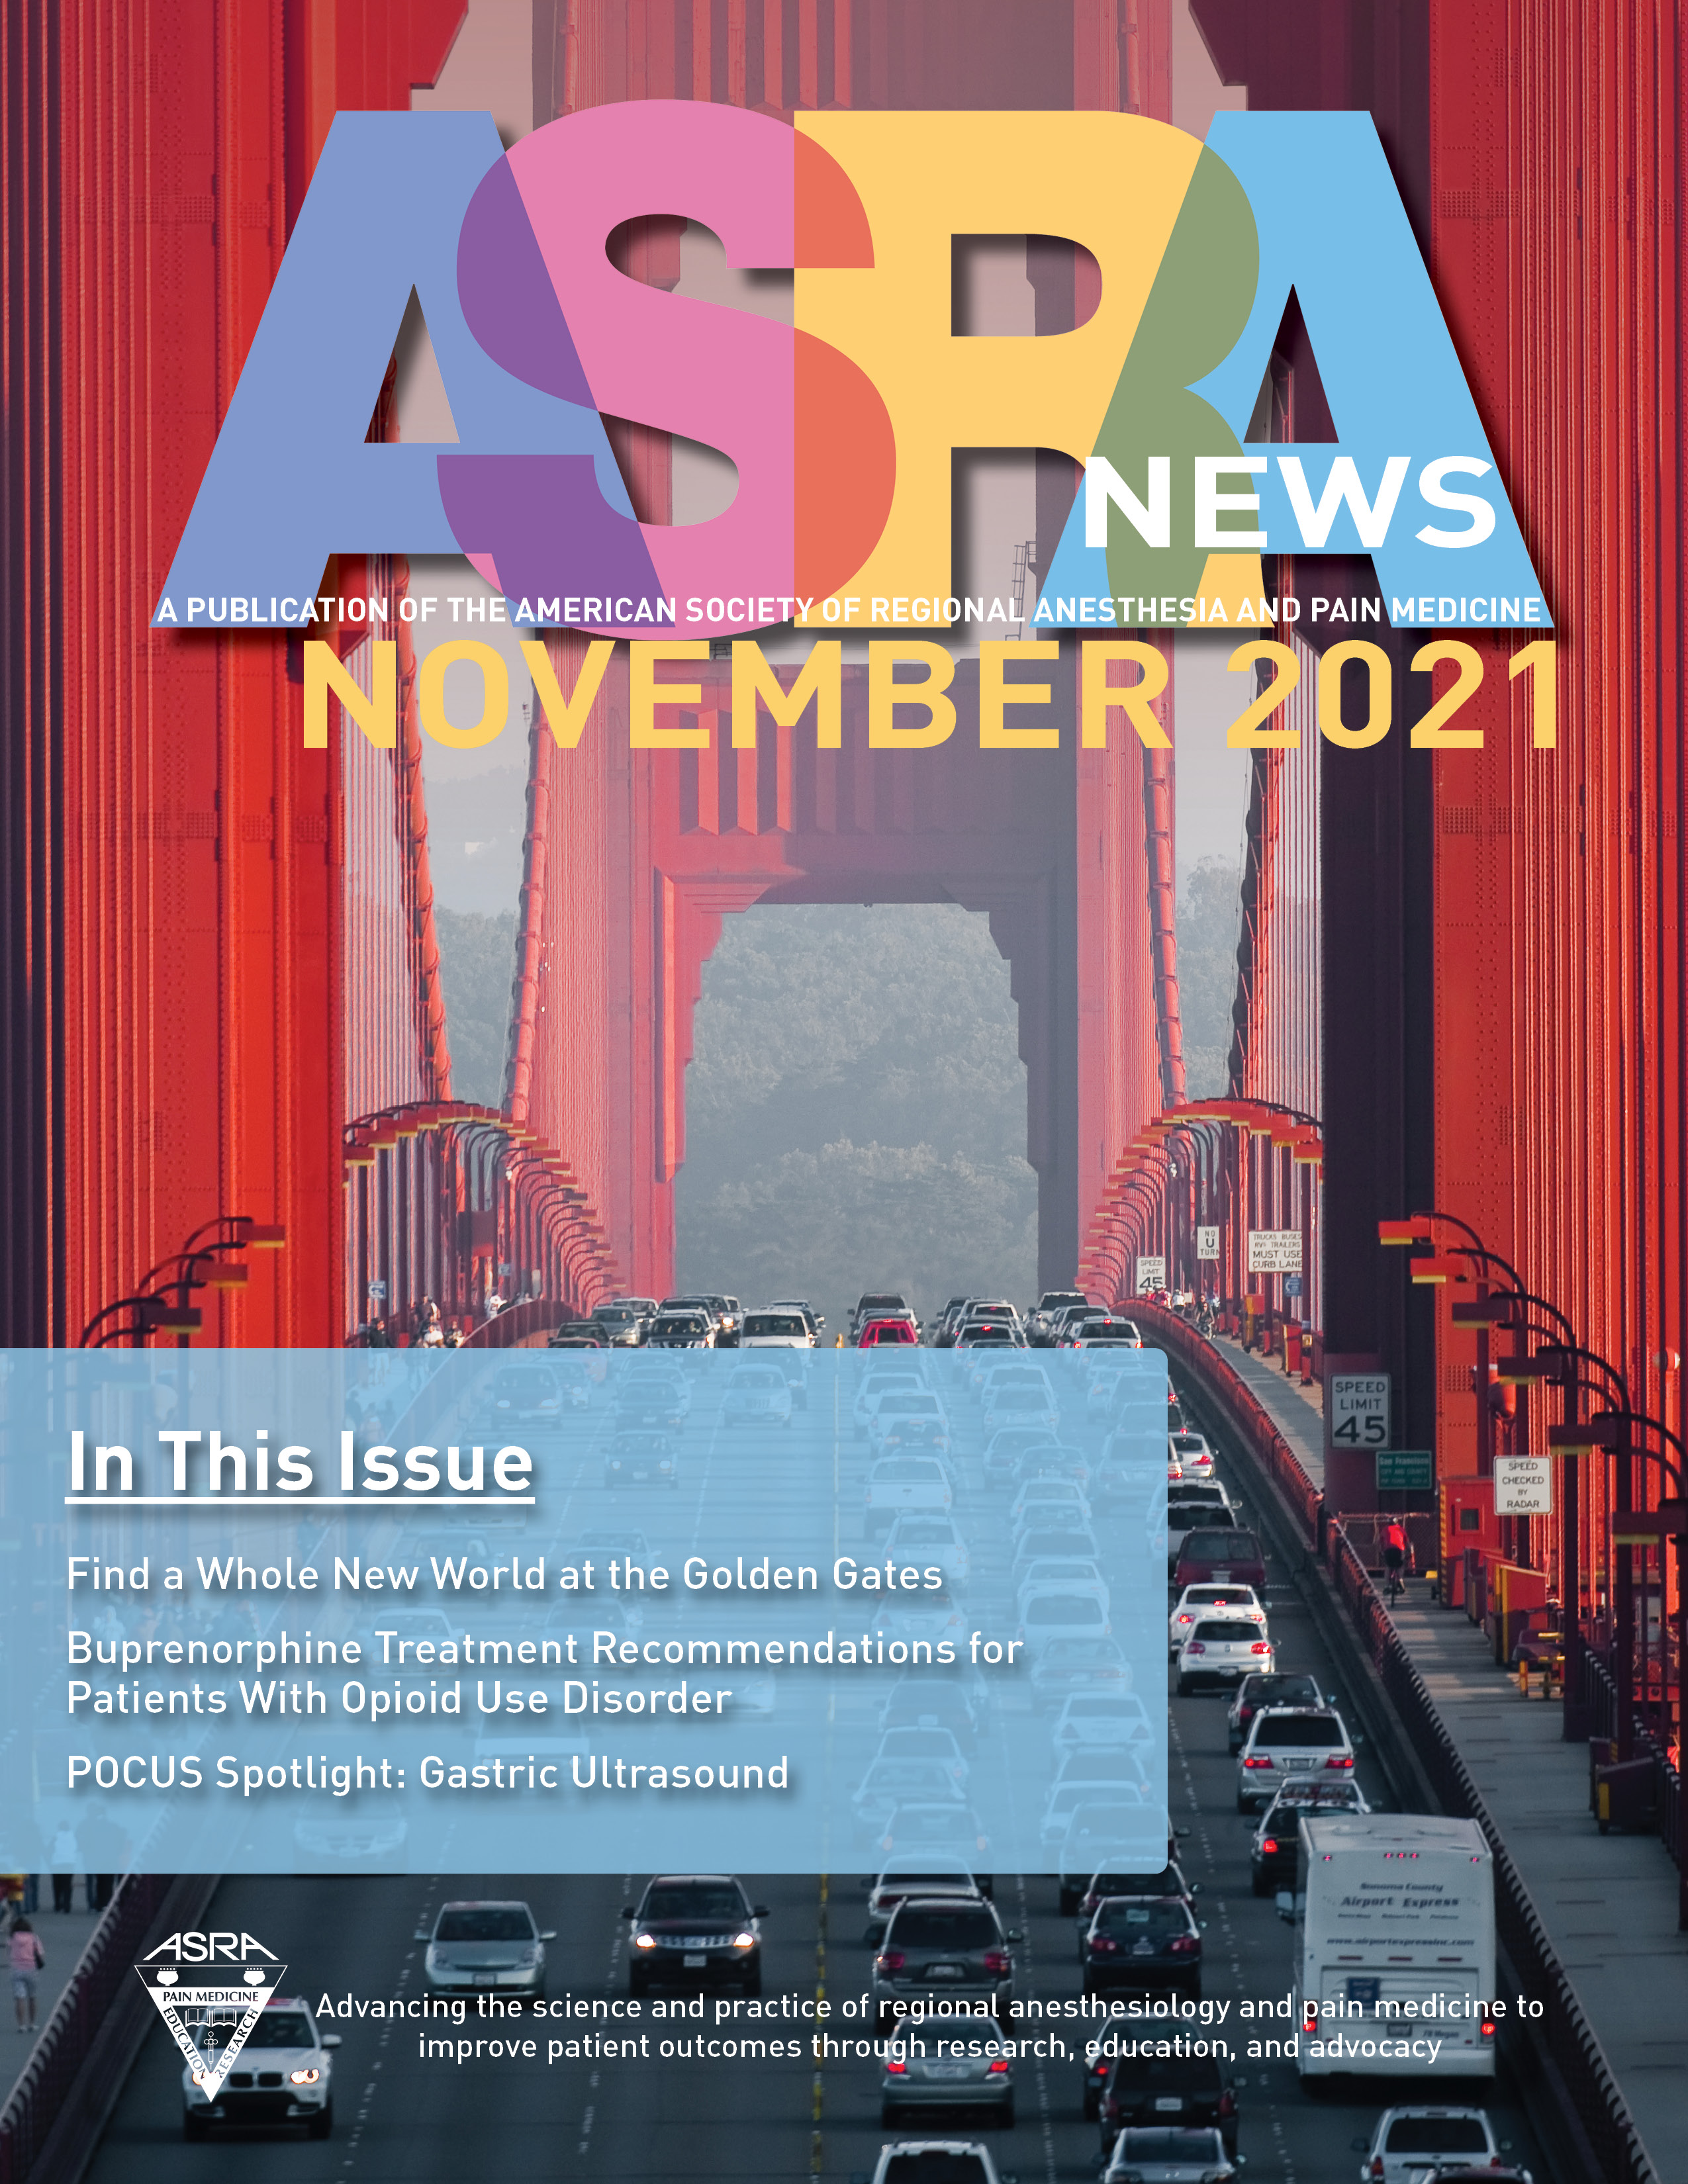 ASRA News November 2021 Cover